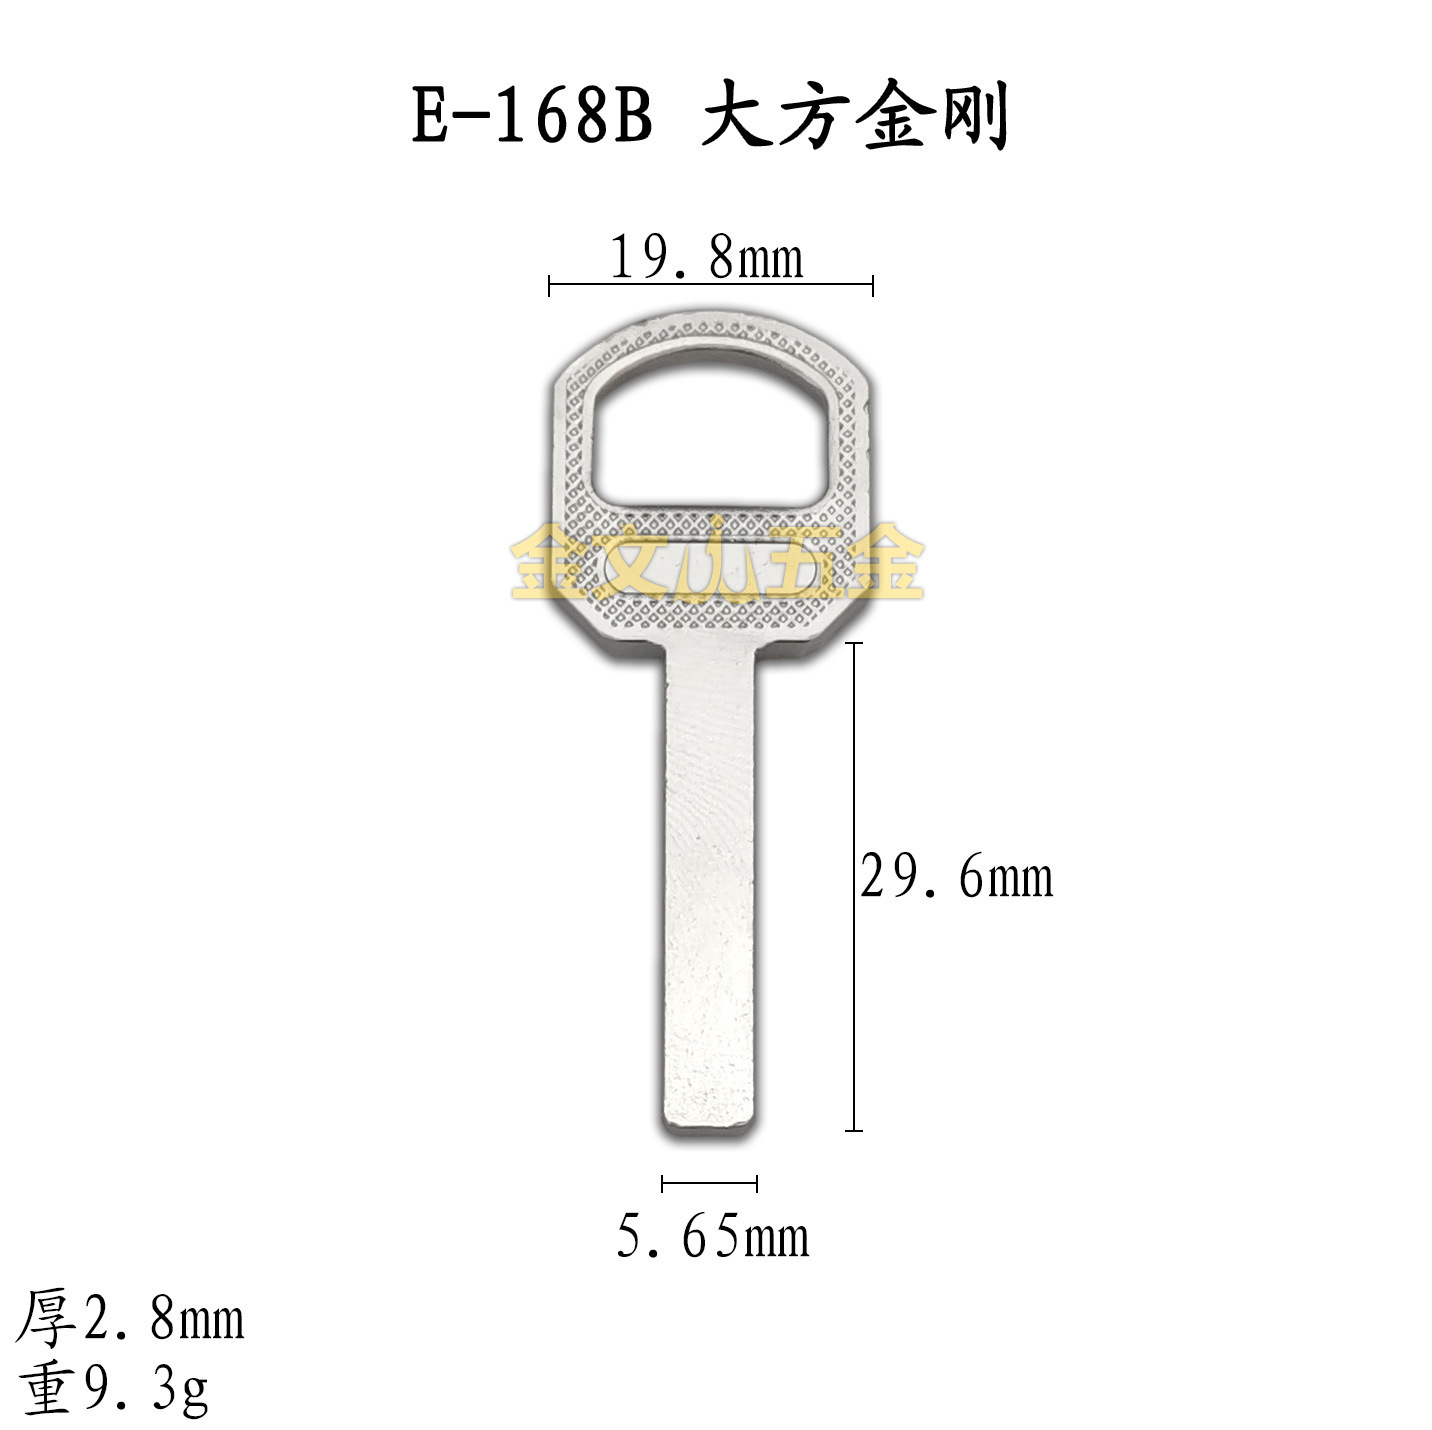 E-168B 适用大方金刚挂锁钥匙胚子 钥匙坯 锁匠耗材 锁具配件